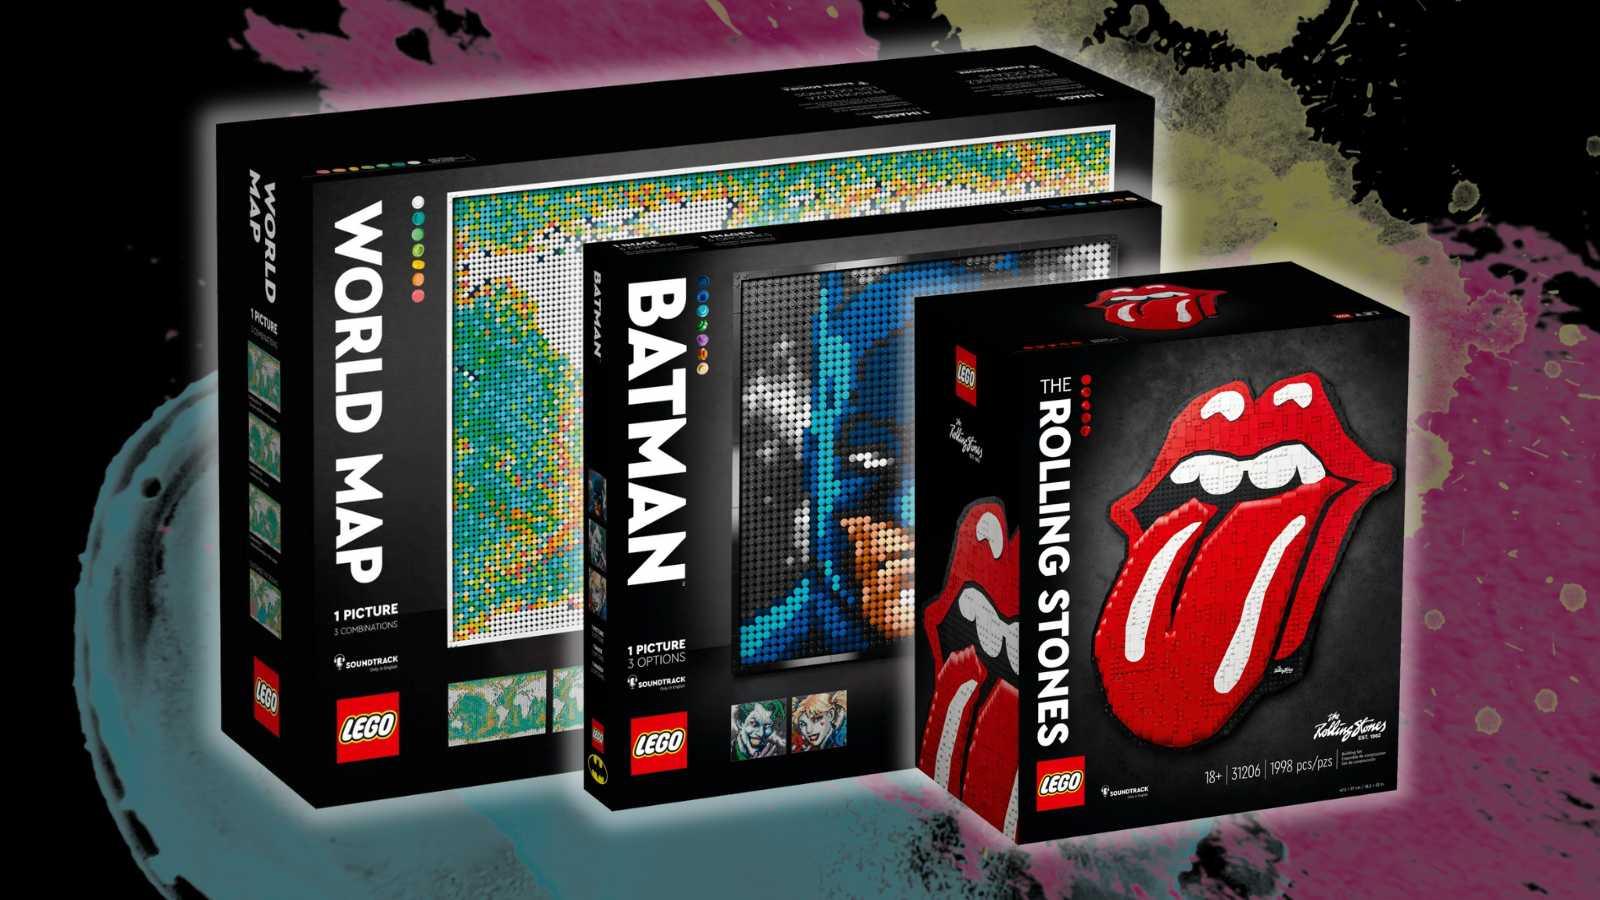 Every LEGO Art set retiring in 2023: Batman, The Rolling Stones